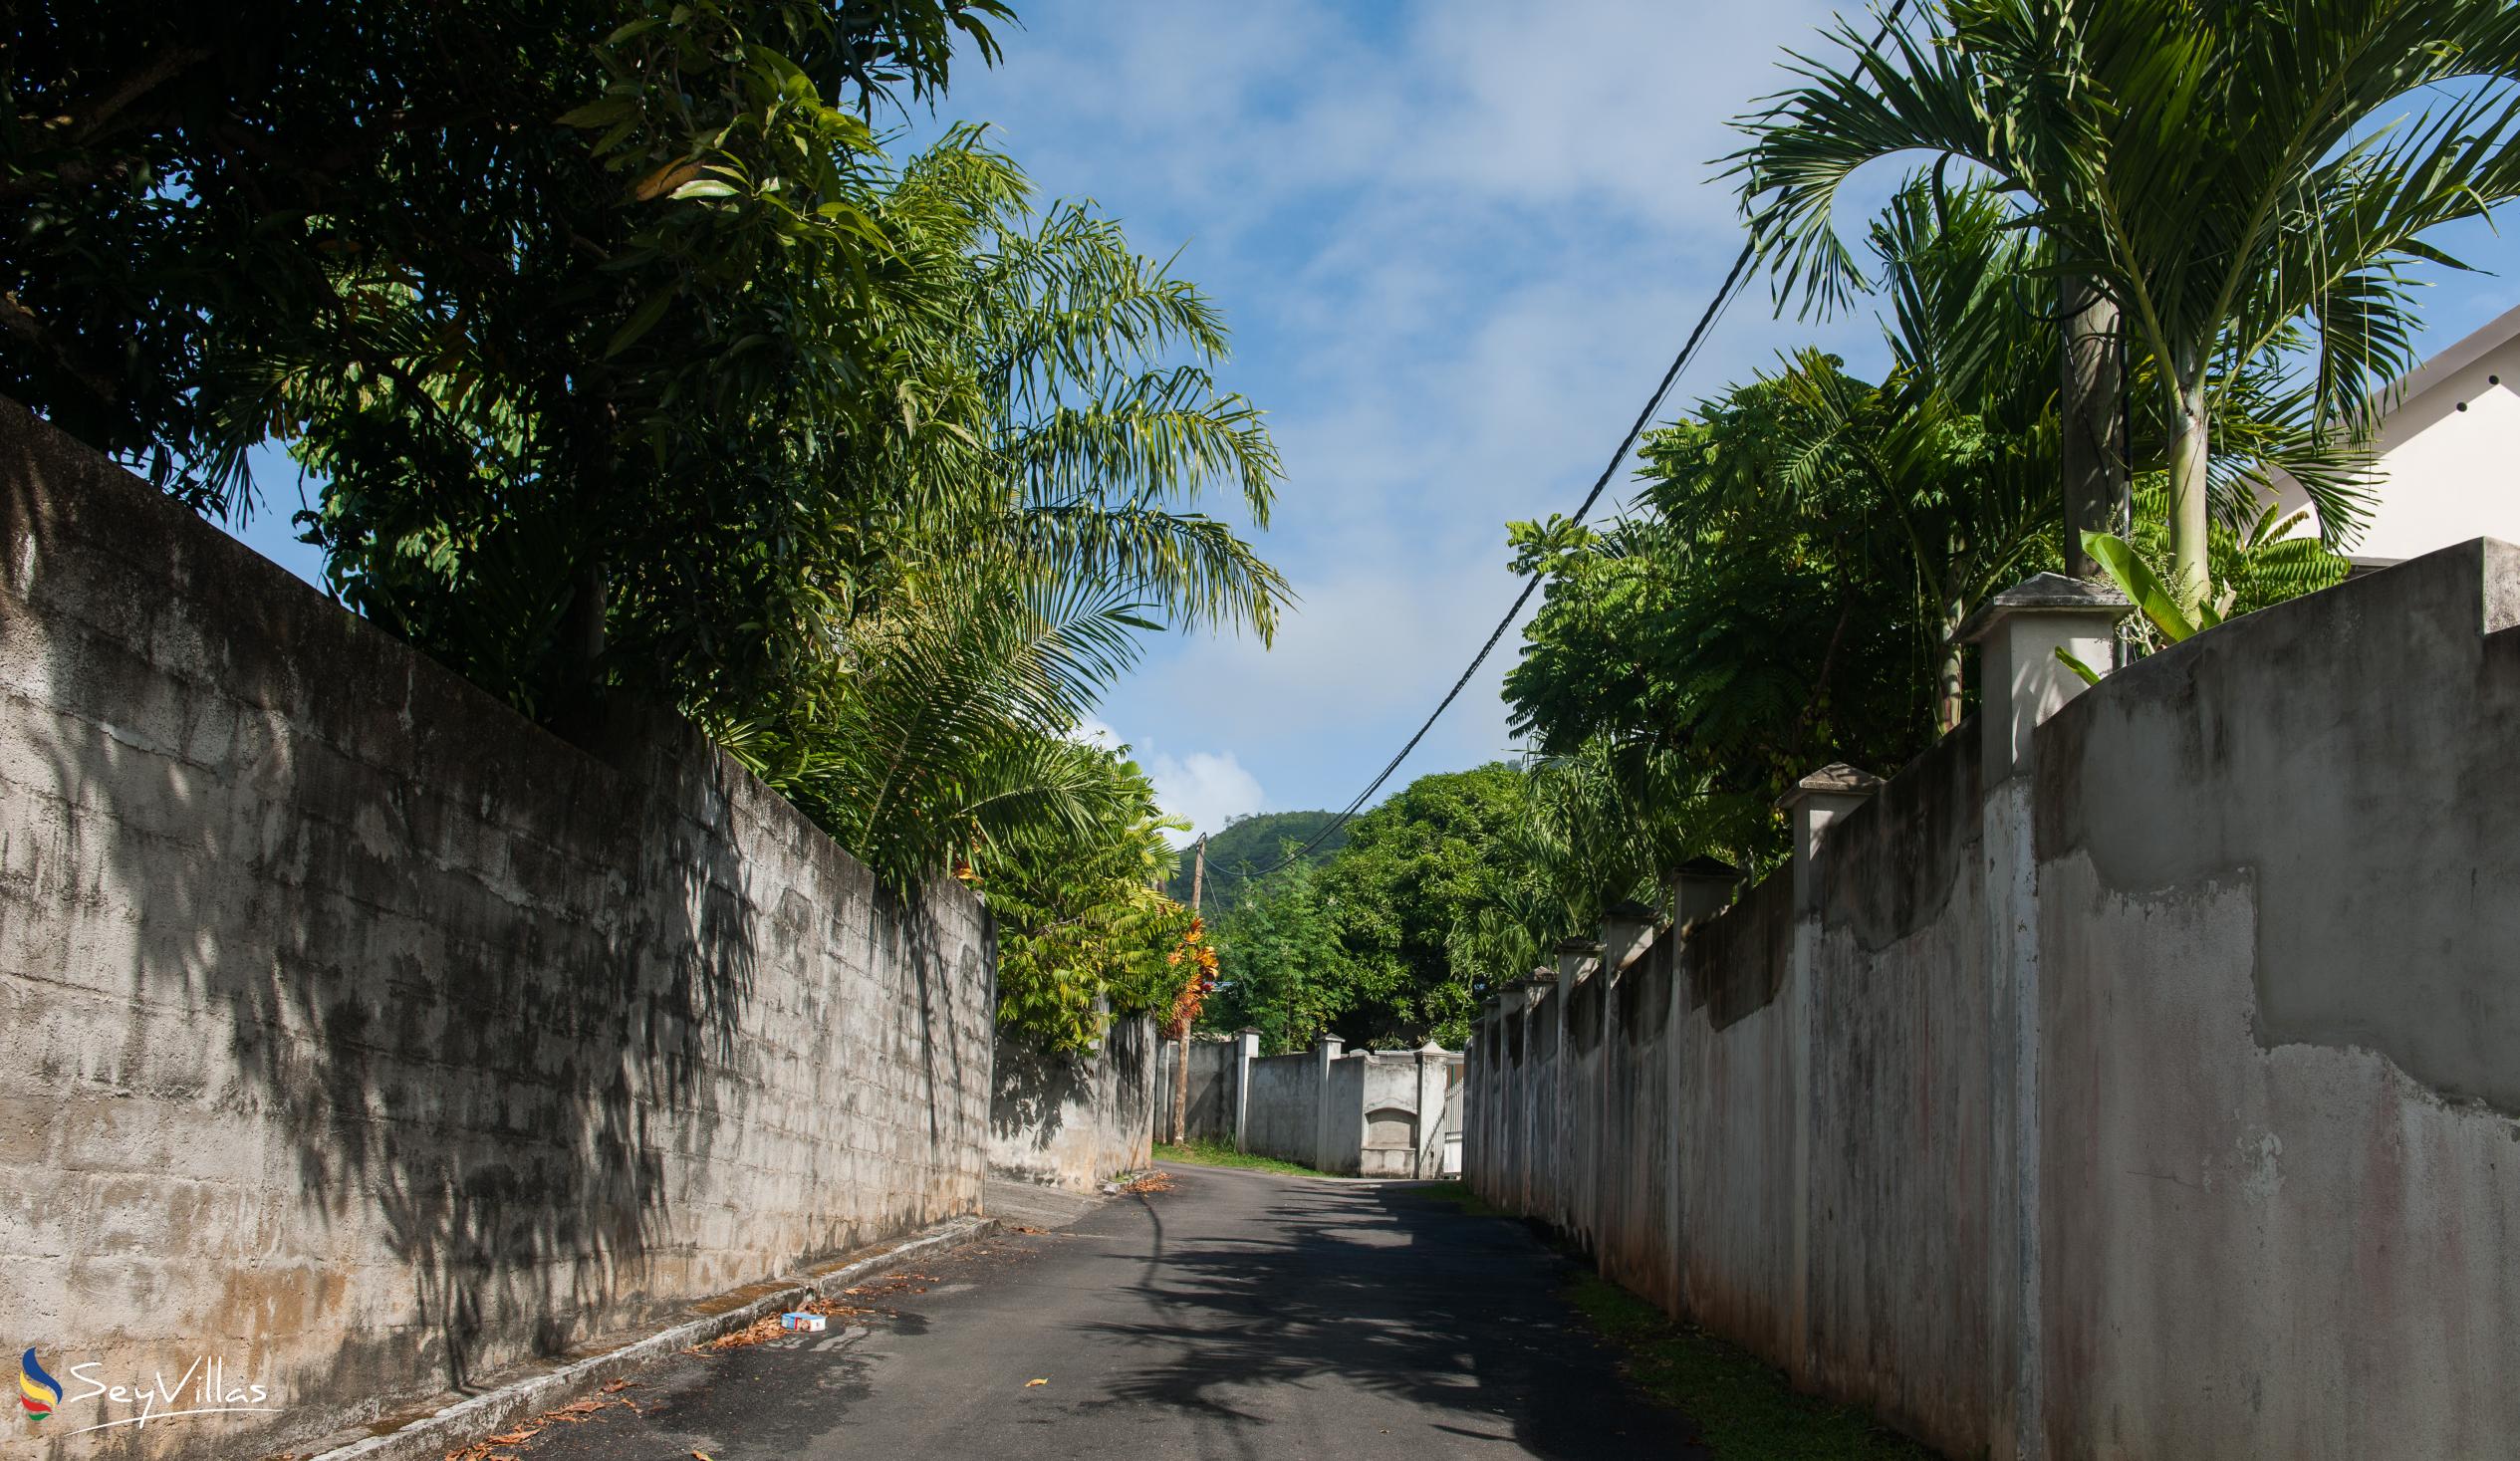 Foto 36: Le Domaine de Bacova - Posizione - Mahé (Seychelles)